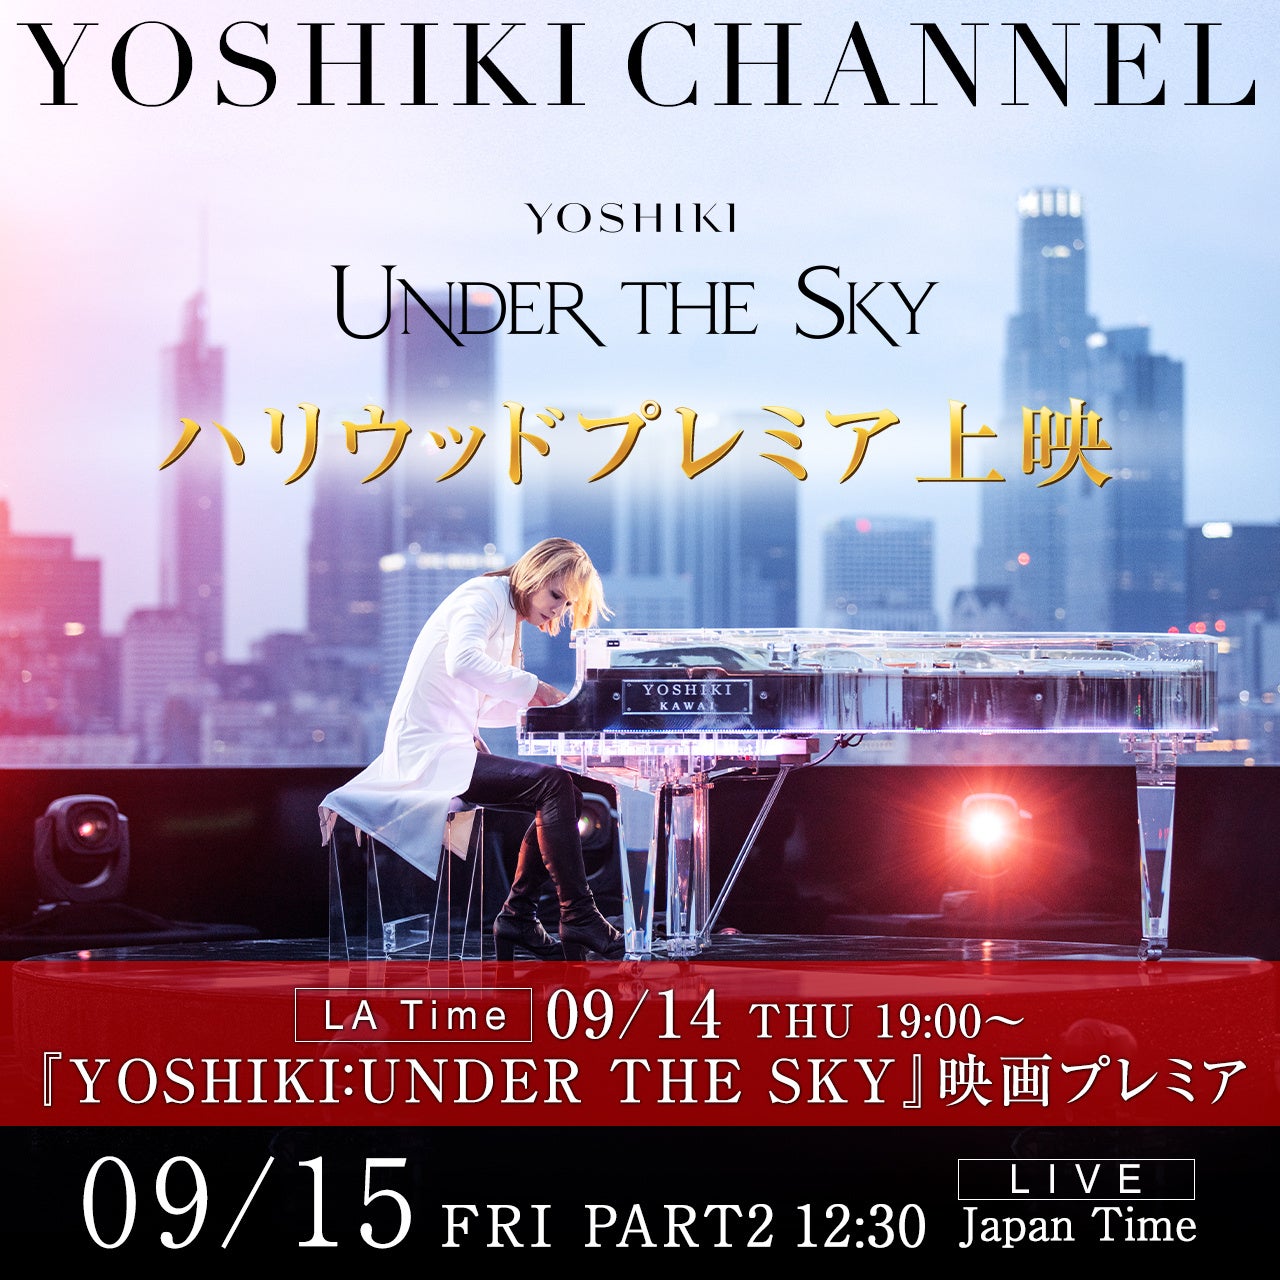 YOSHIKI日本人として初 米チャイニーズ・シアターに名を刻む歴史的瞬間&「YOSHIKI : UNDER THE SKY」ハリウッドプレミア 生中継のサブ画像2